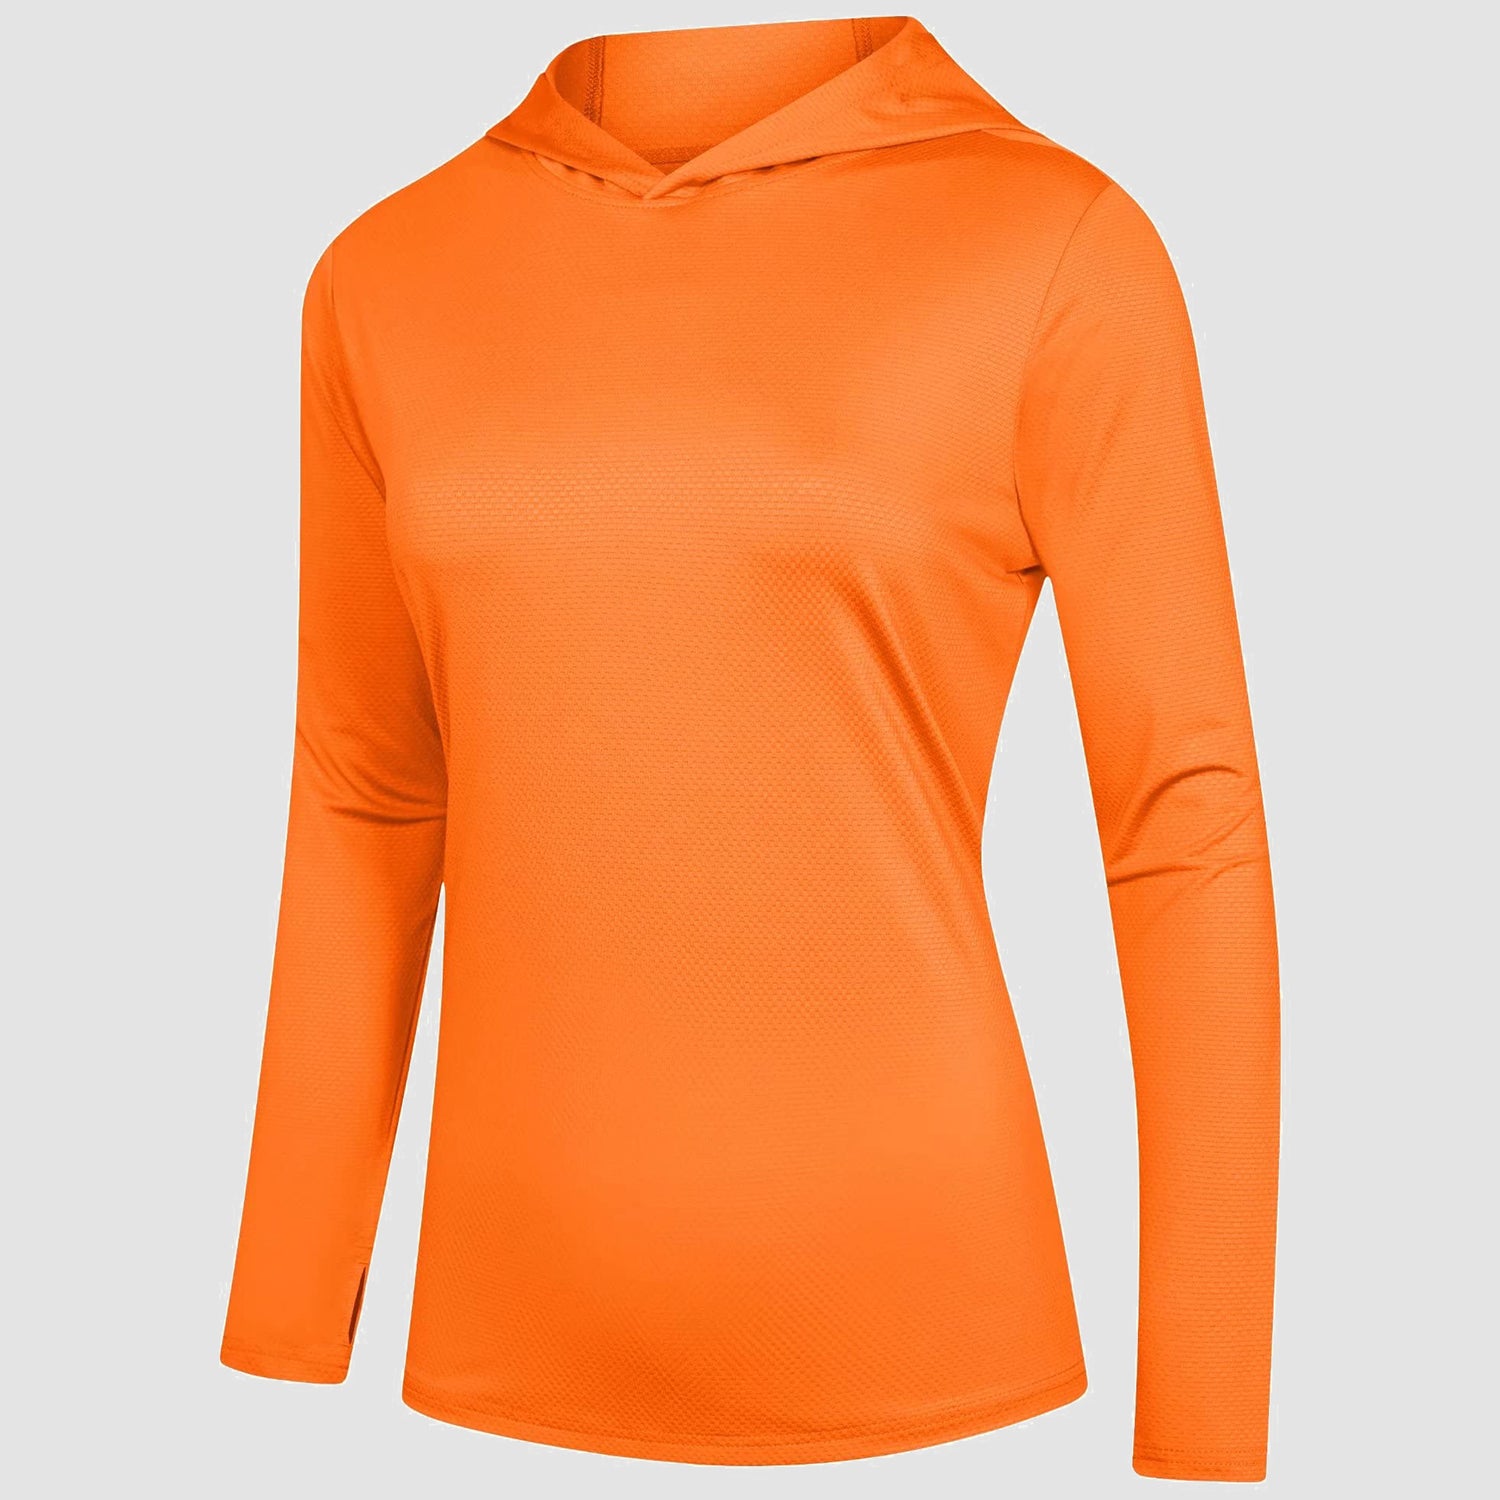 Women's Hoodie Shirts UPF 50+ Sun Protection Long Sleeve UV Shirt Fishing Hiking Athletic Shirts with Thumb Hole, Pale Blue / L